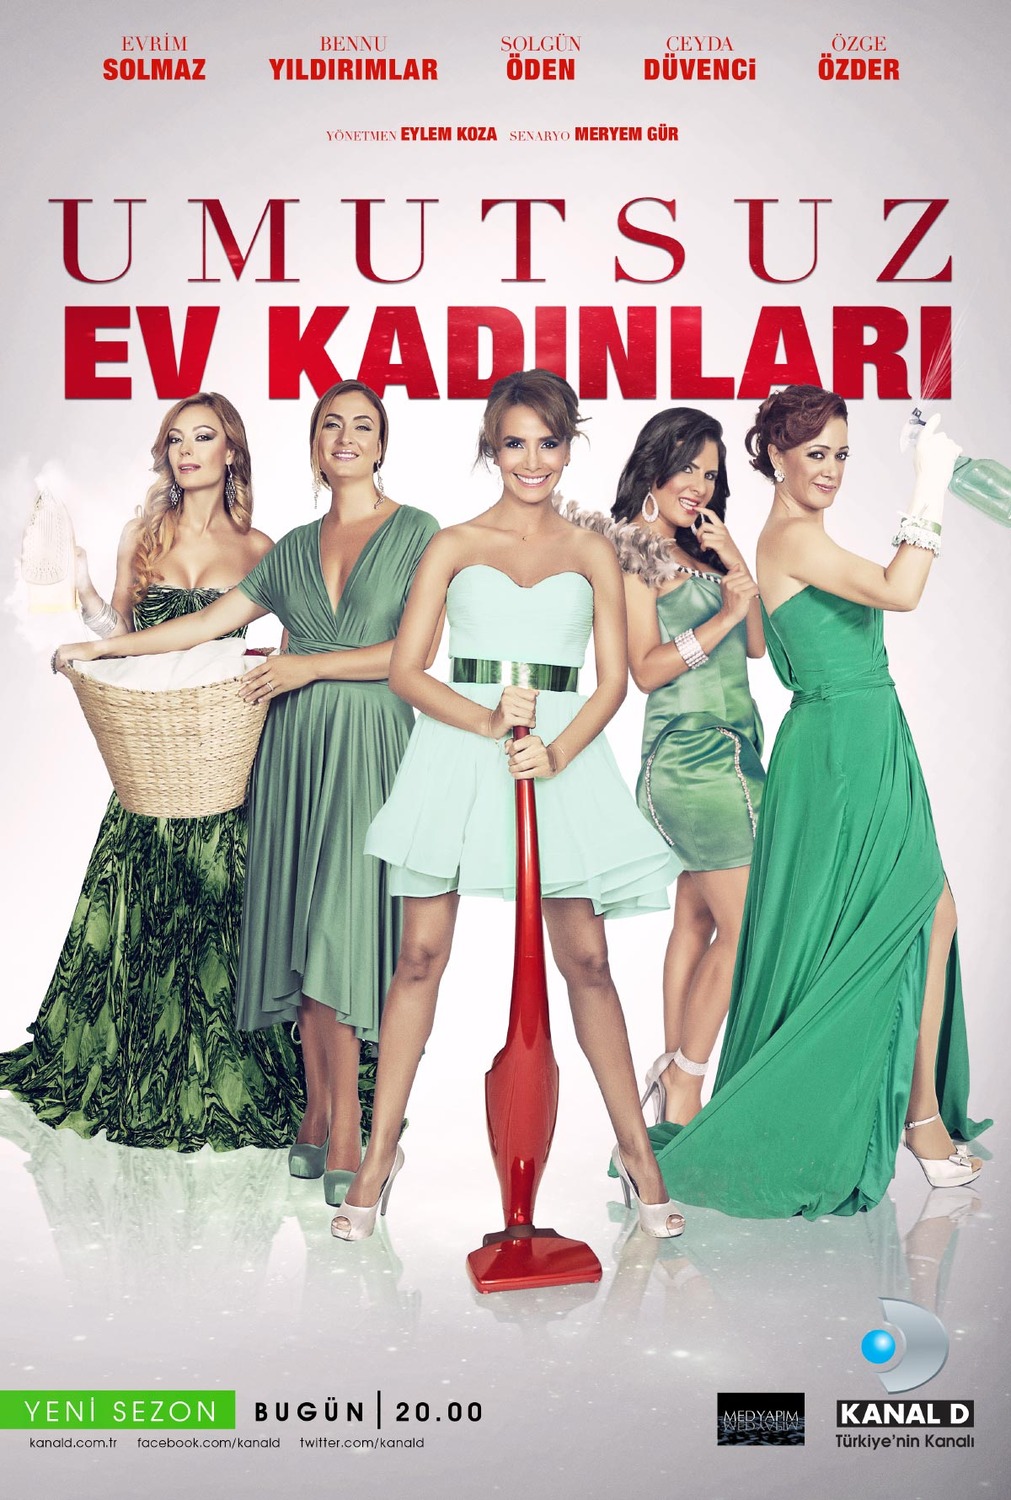 Extra Large TV Poster Image for Umutsuz Ev Kadinlari 